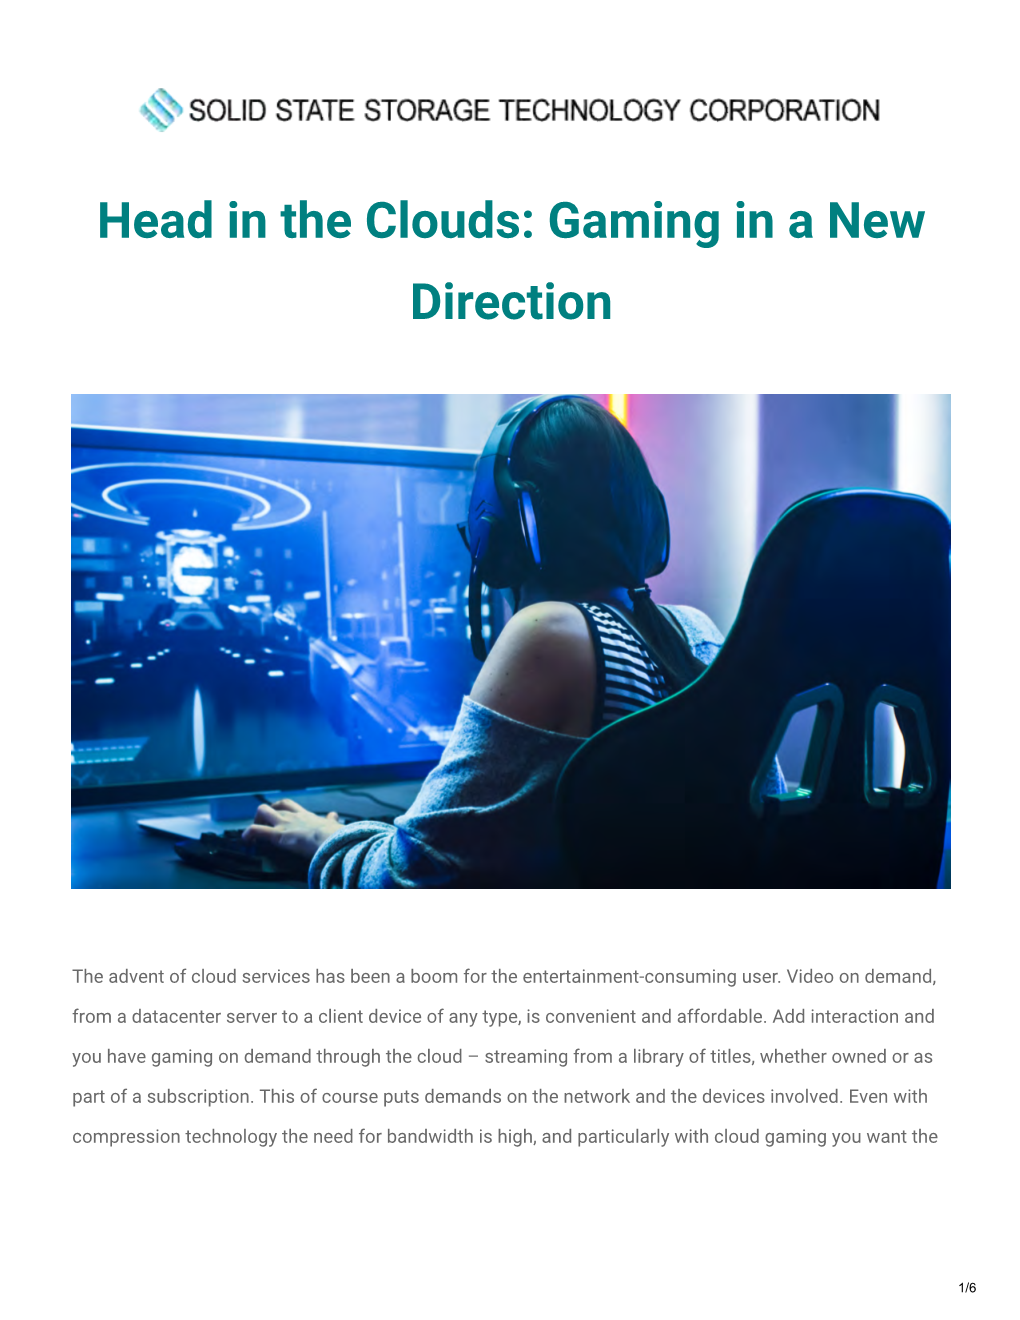 Cloud Gaming Blog